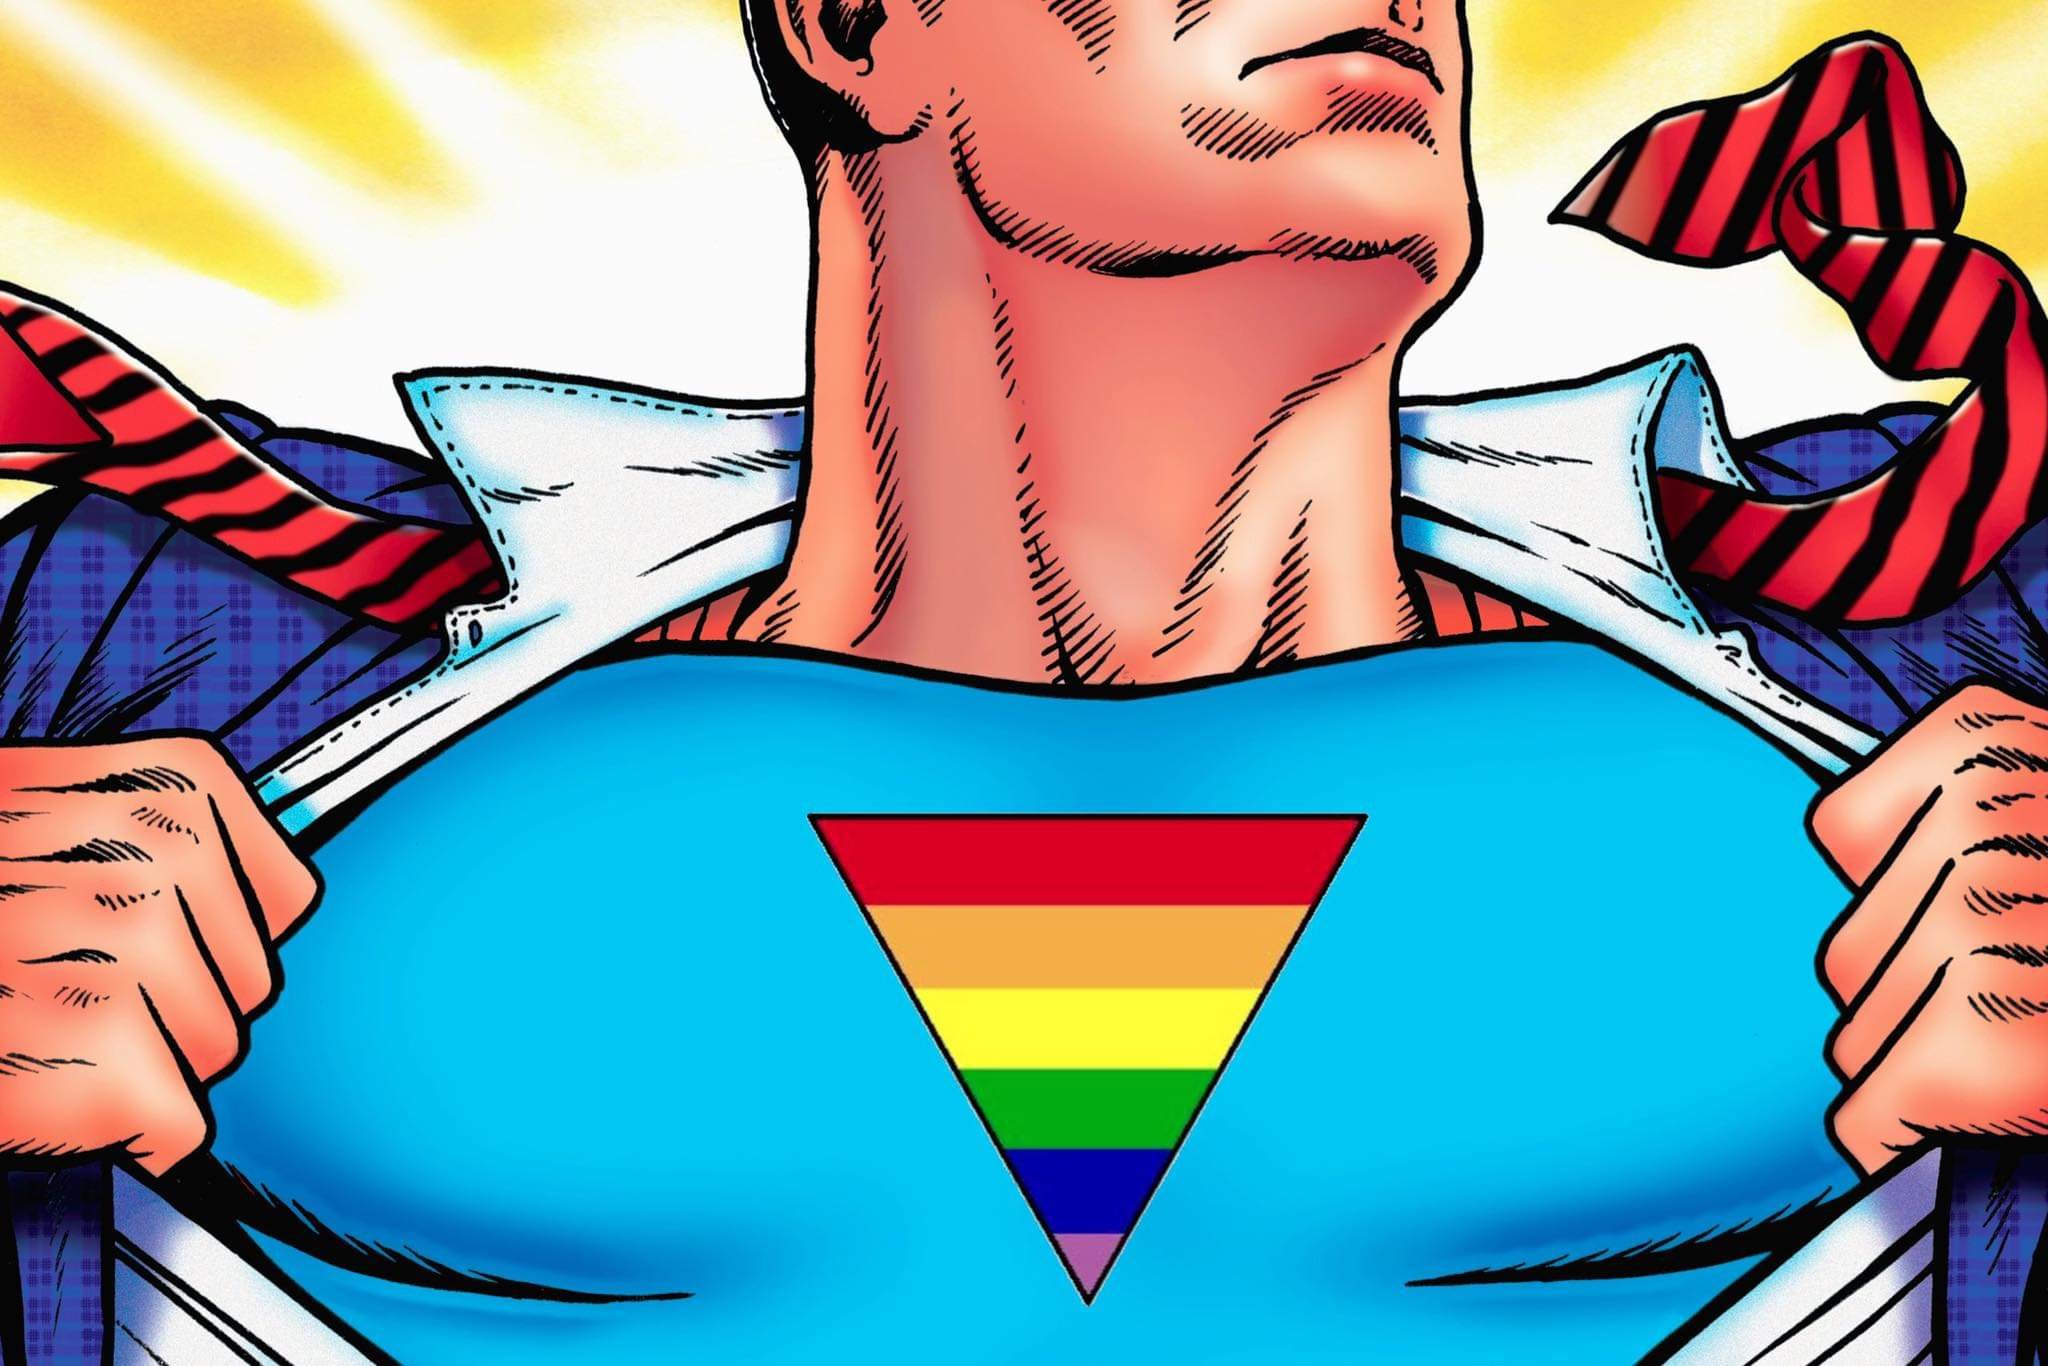 Yeni "Supermen" gey olacaq - FOTOLAR